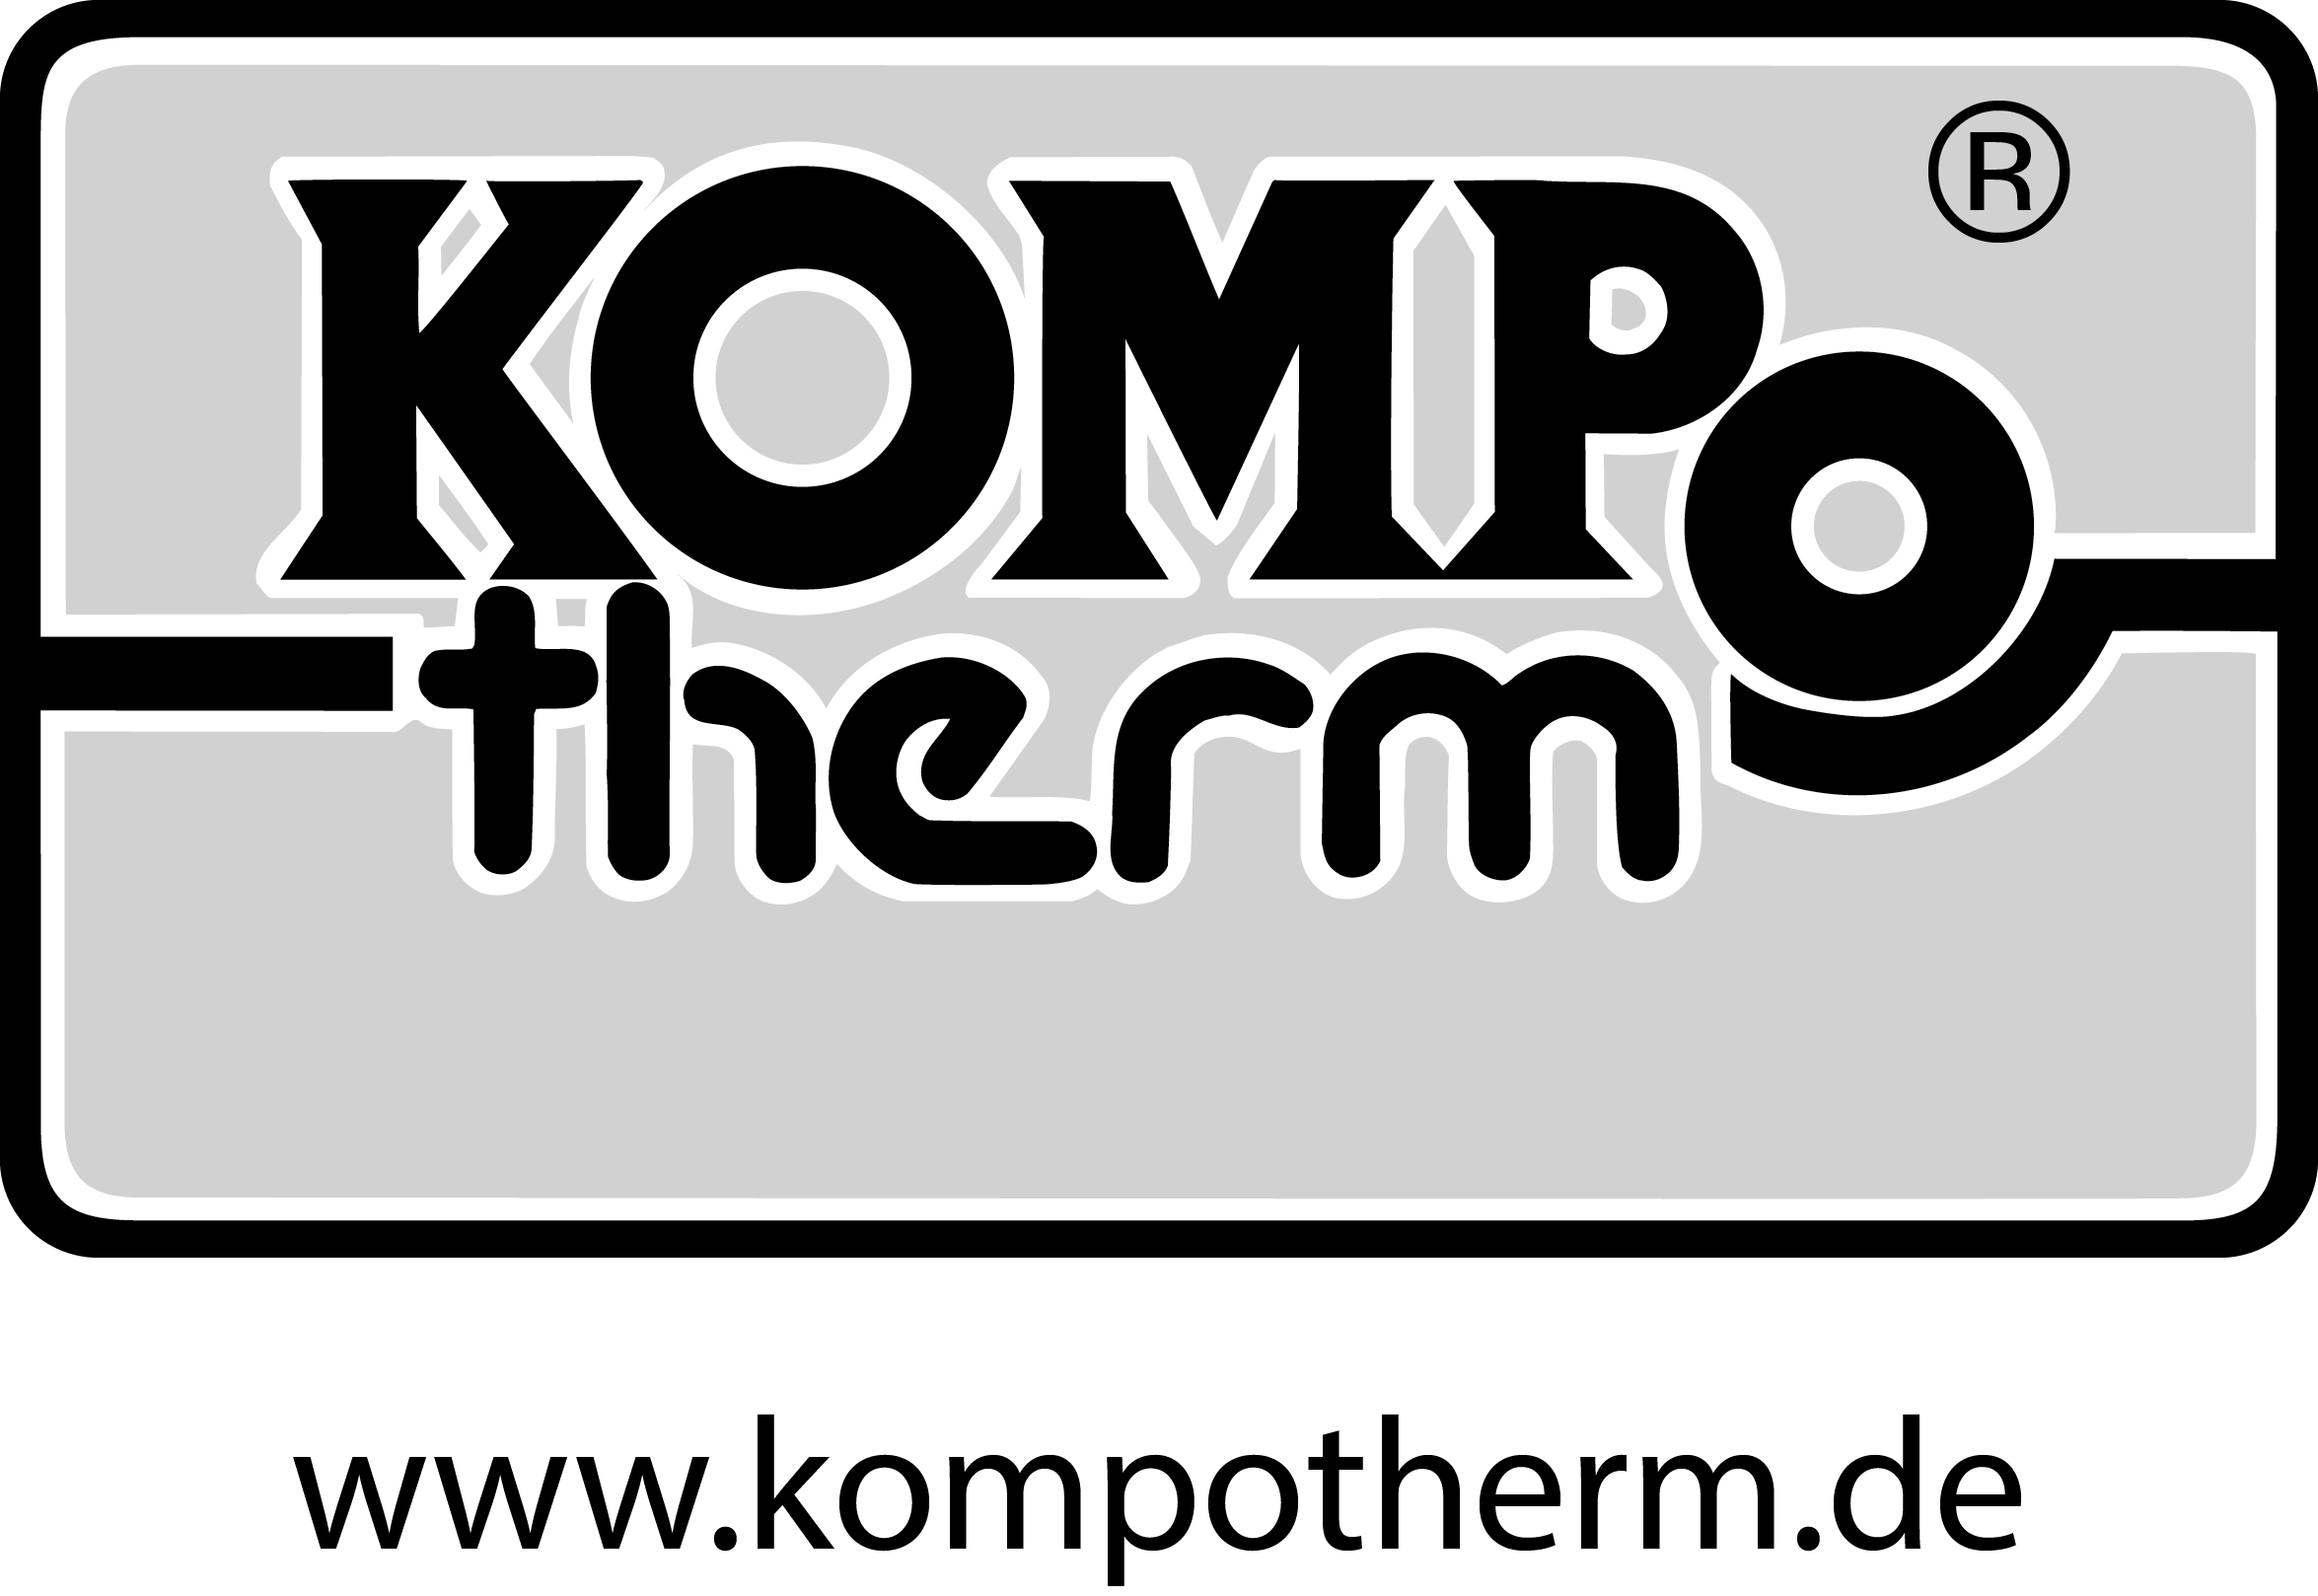 Kompotherm-Firmen-Logo_WWW